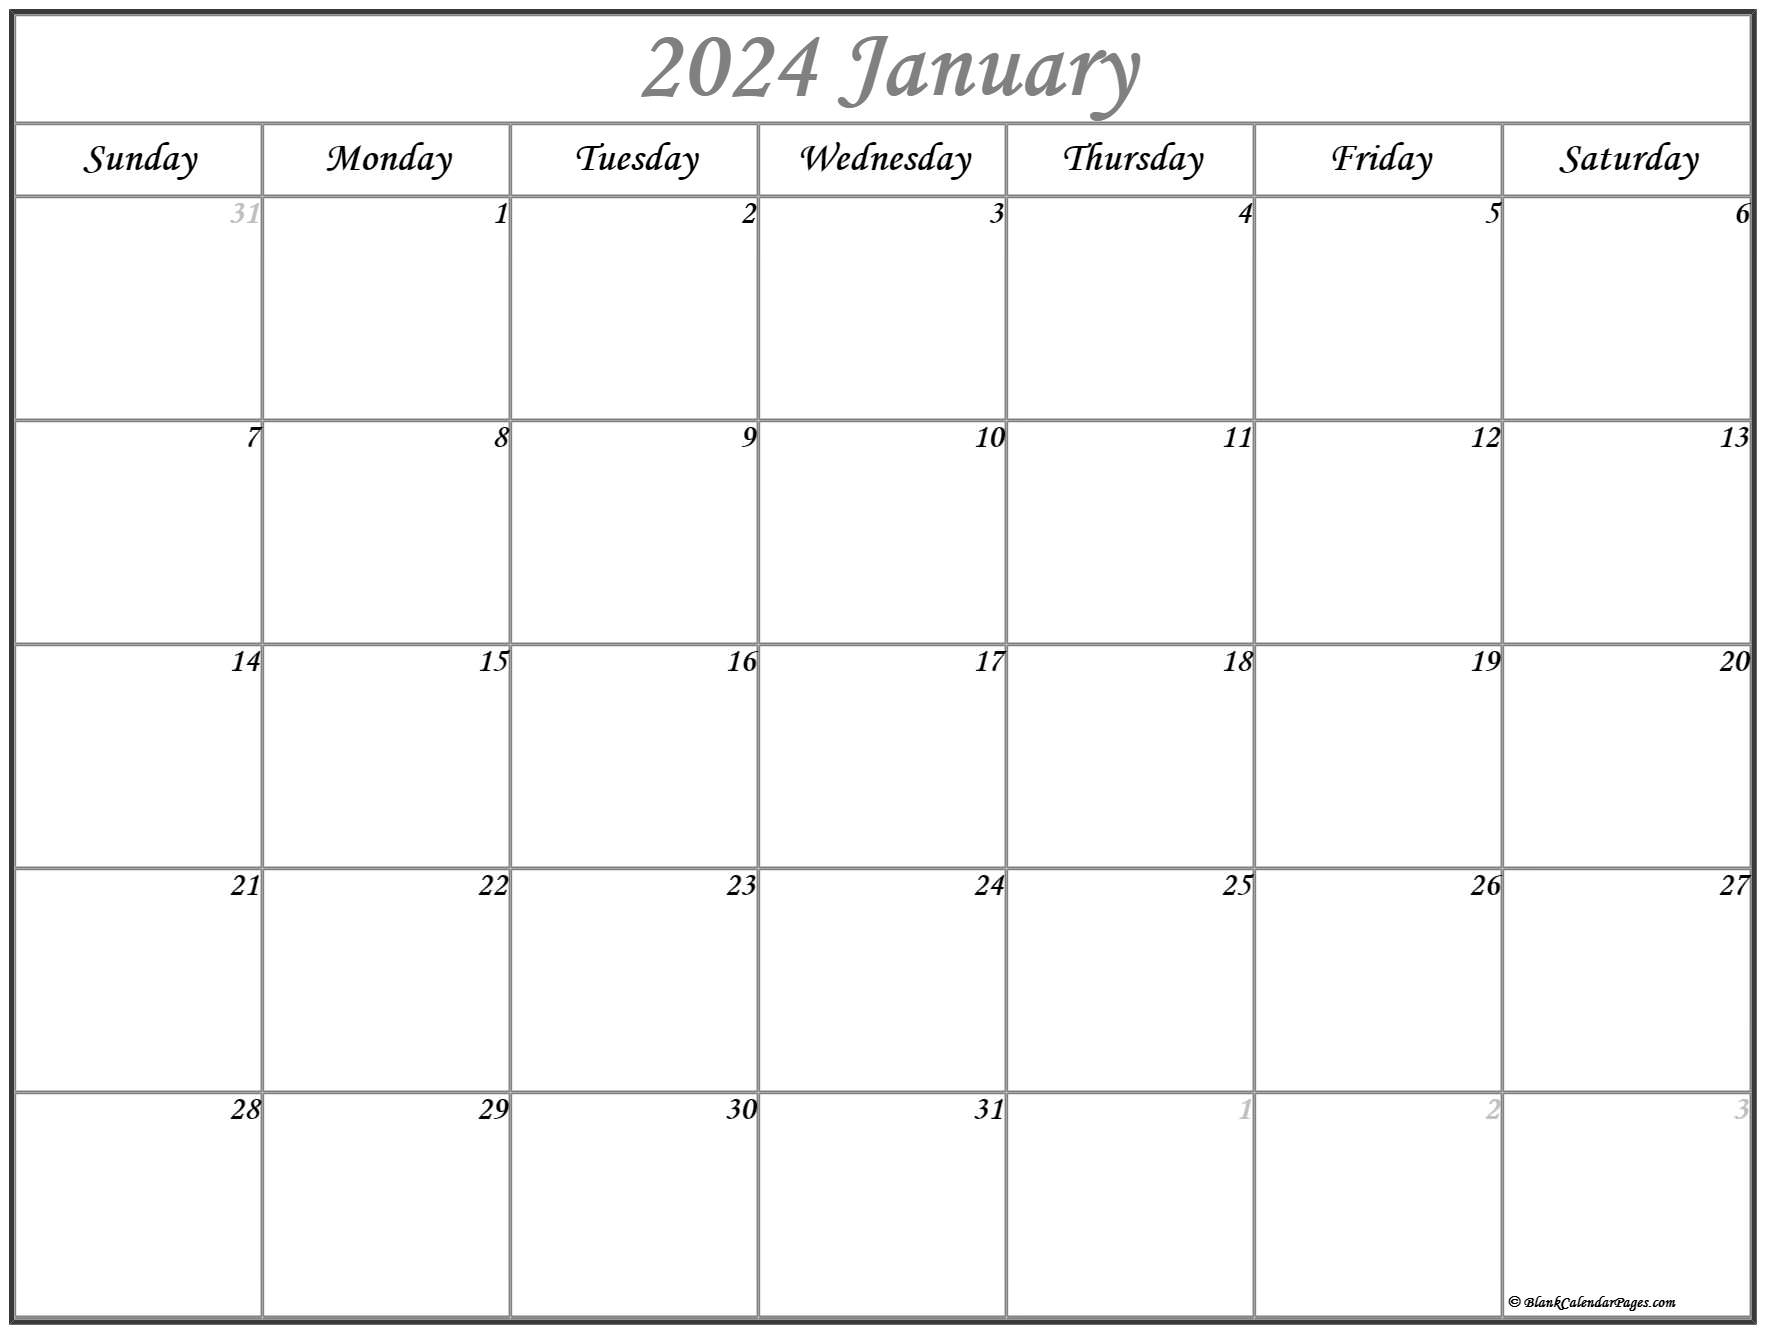 2024 Monthly Calendar Pdf Free Printable Templates 2024 Monthly - Free Printable 2024 Monthly Calendar Template